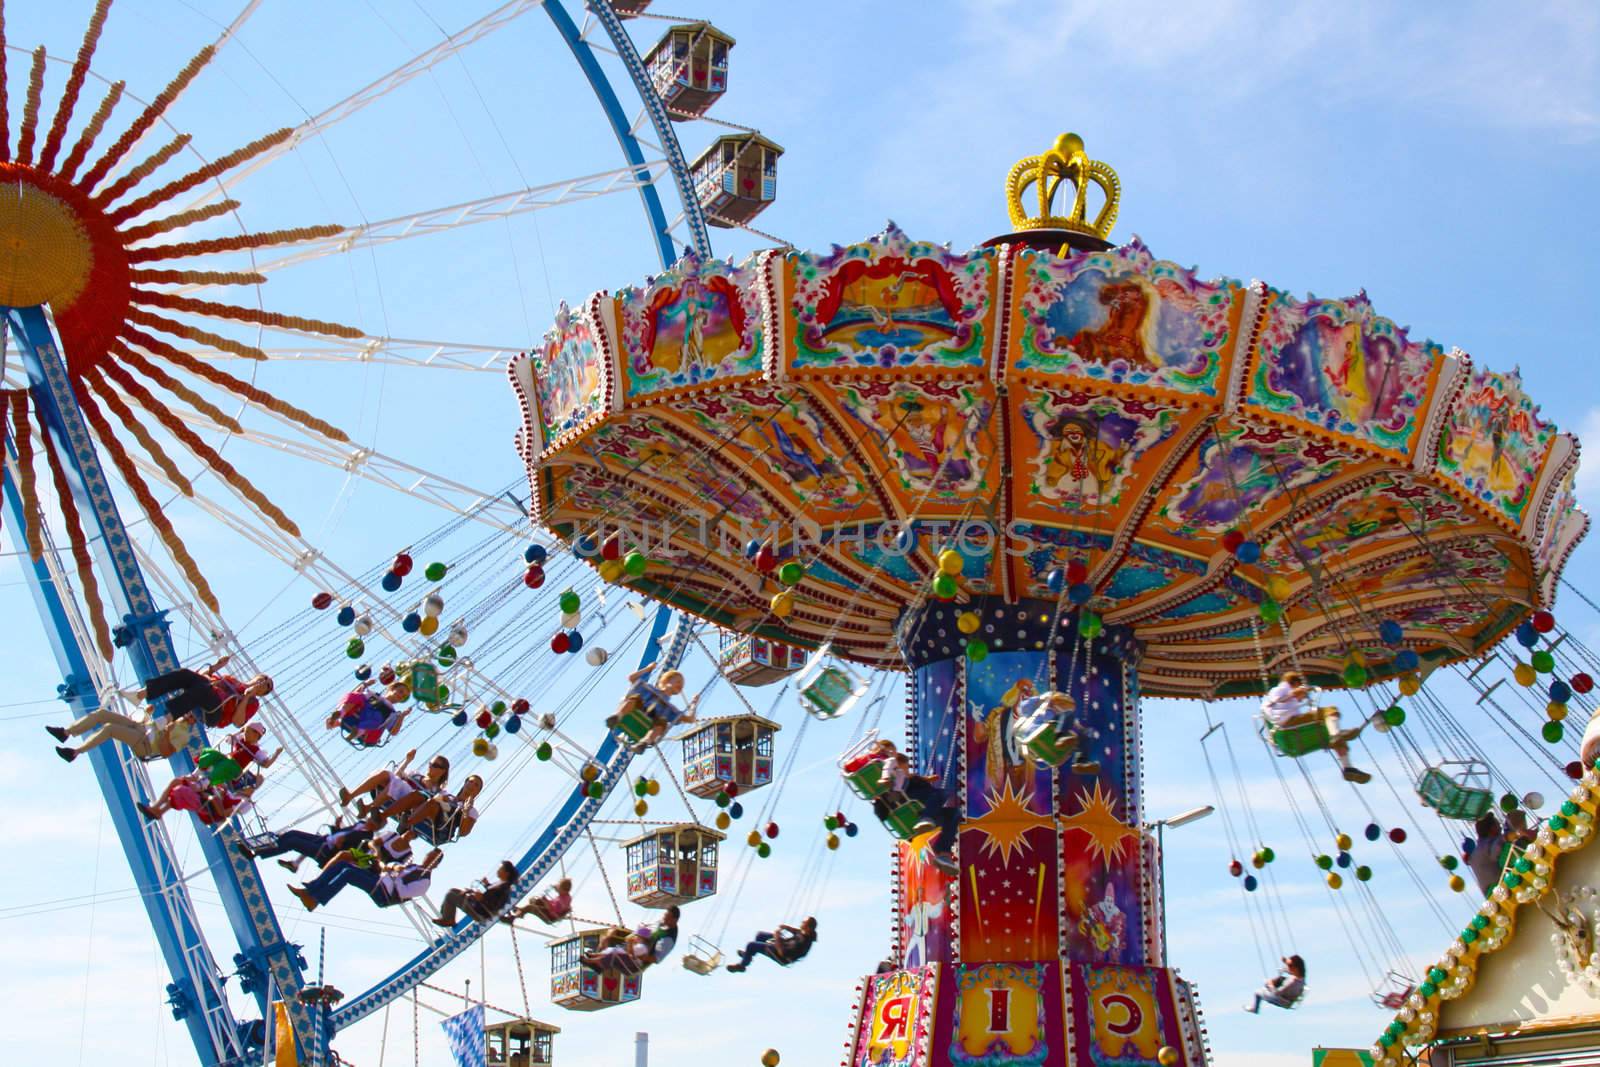 Otoberfest carousel by photochecker